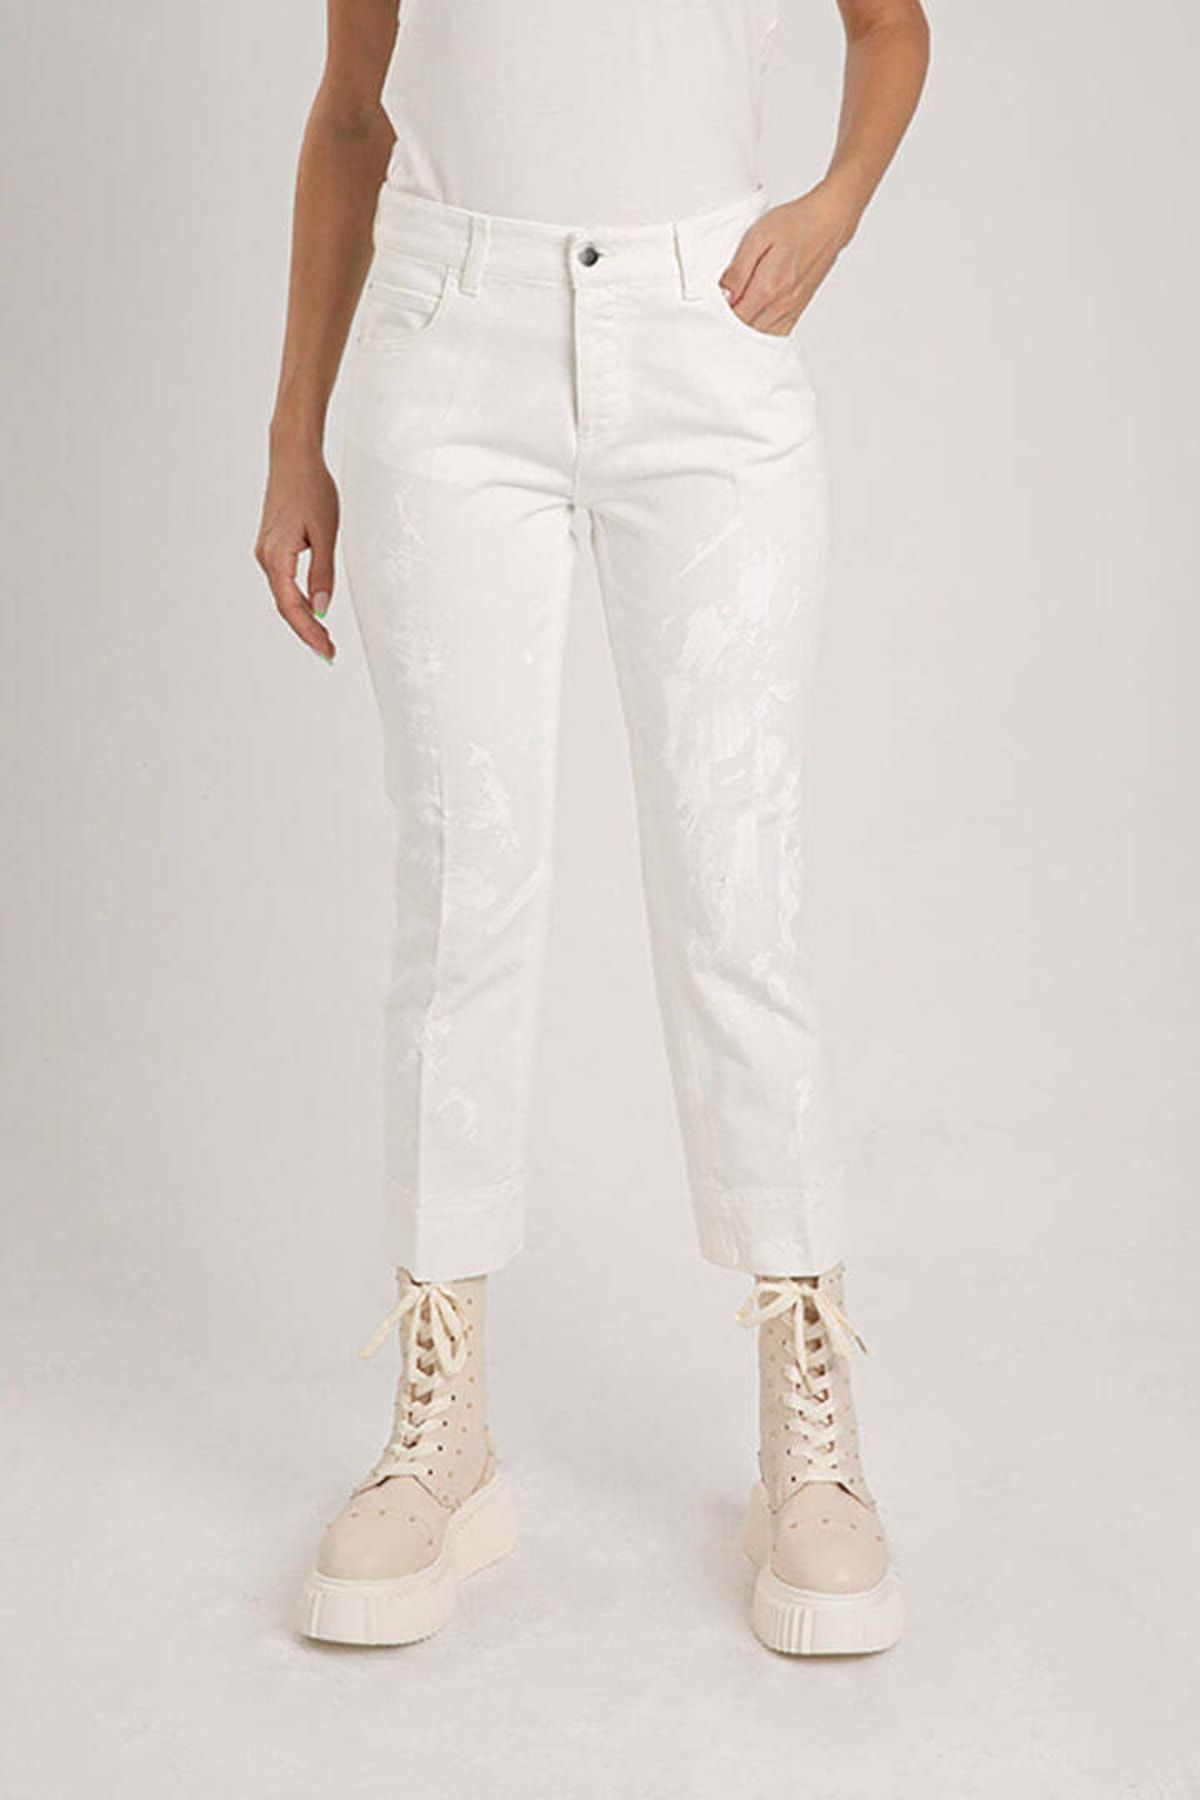 Emporio Armani Kadın Regular Fit Normal Bel Beyaz Jeans 3h2j45 2n4rz-101